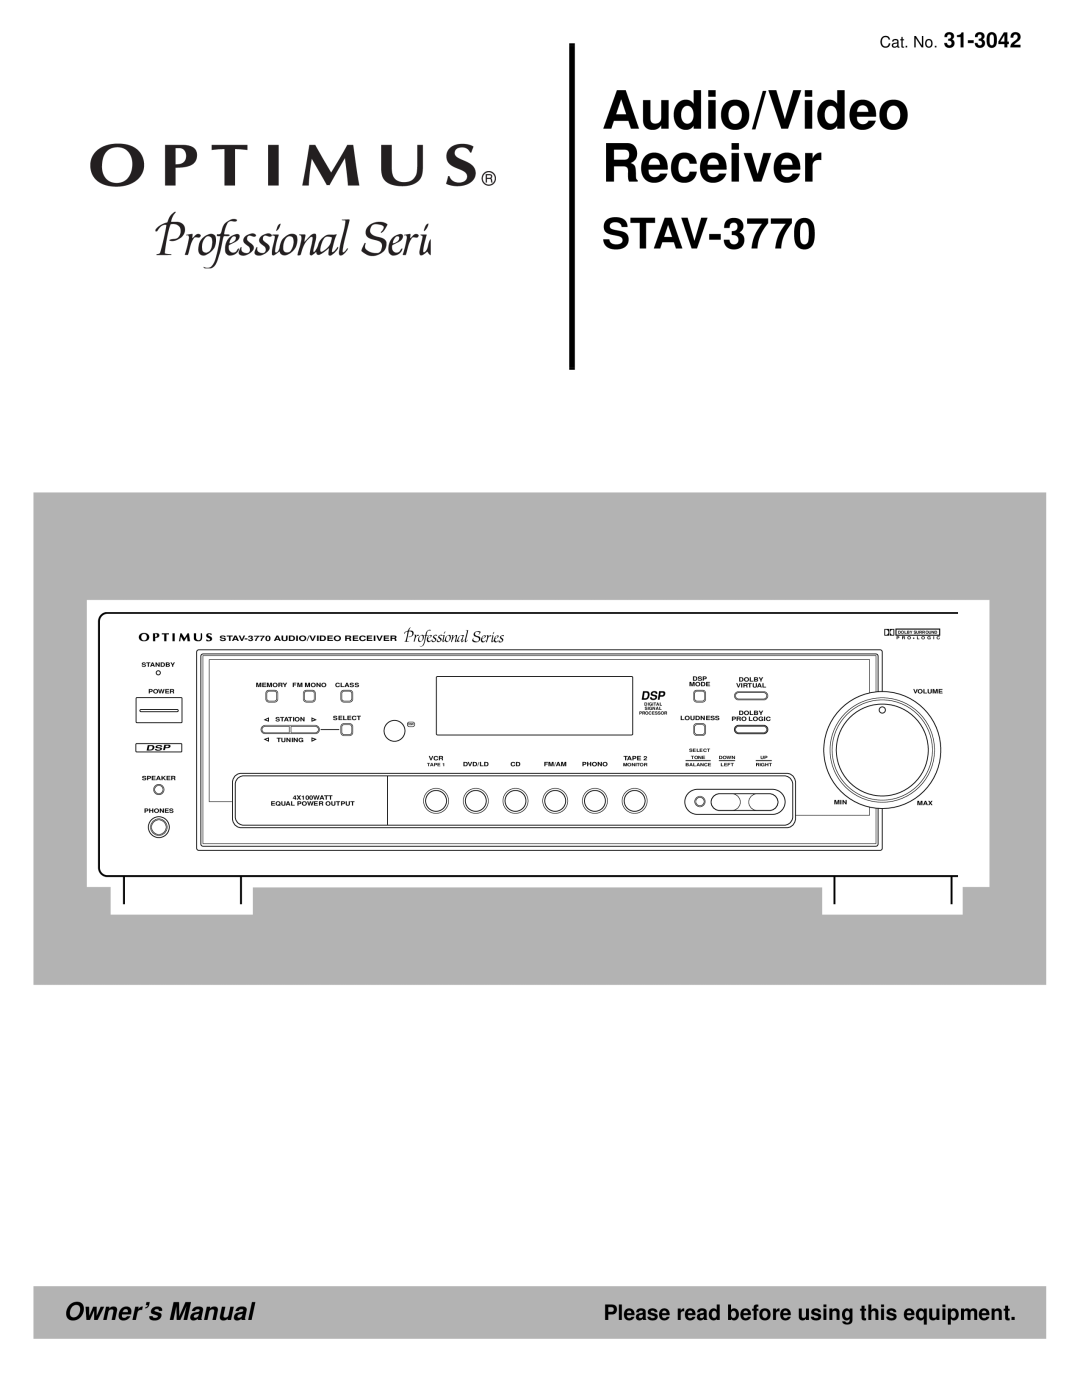 Panasonic STAV-3770 owner manual Please read before using this equipment, Audio/Video Receiver 